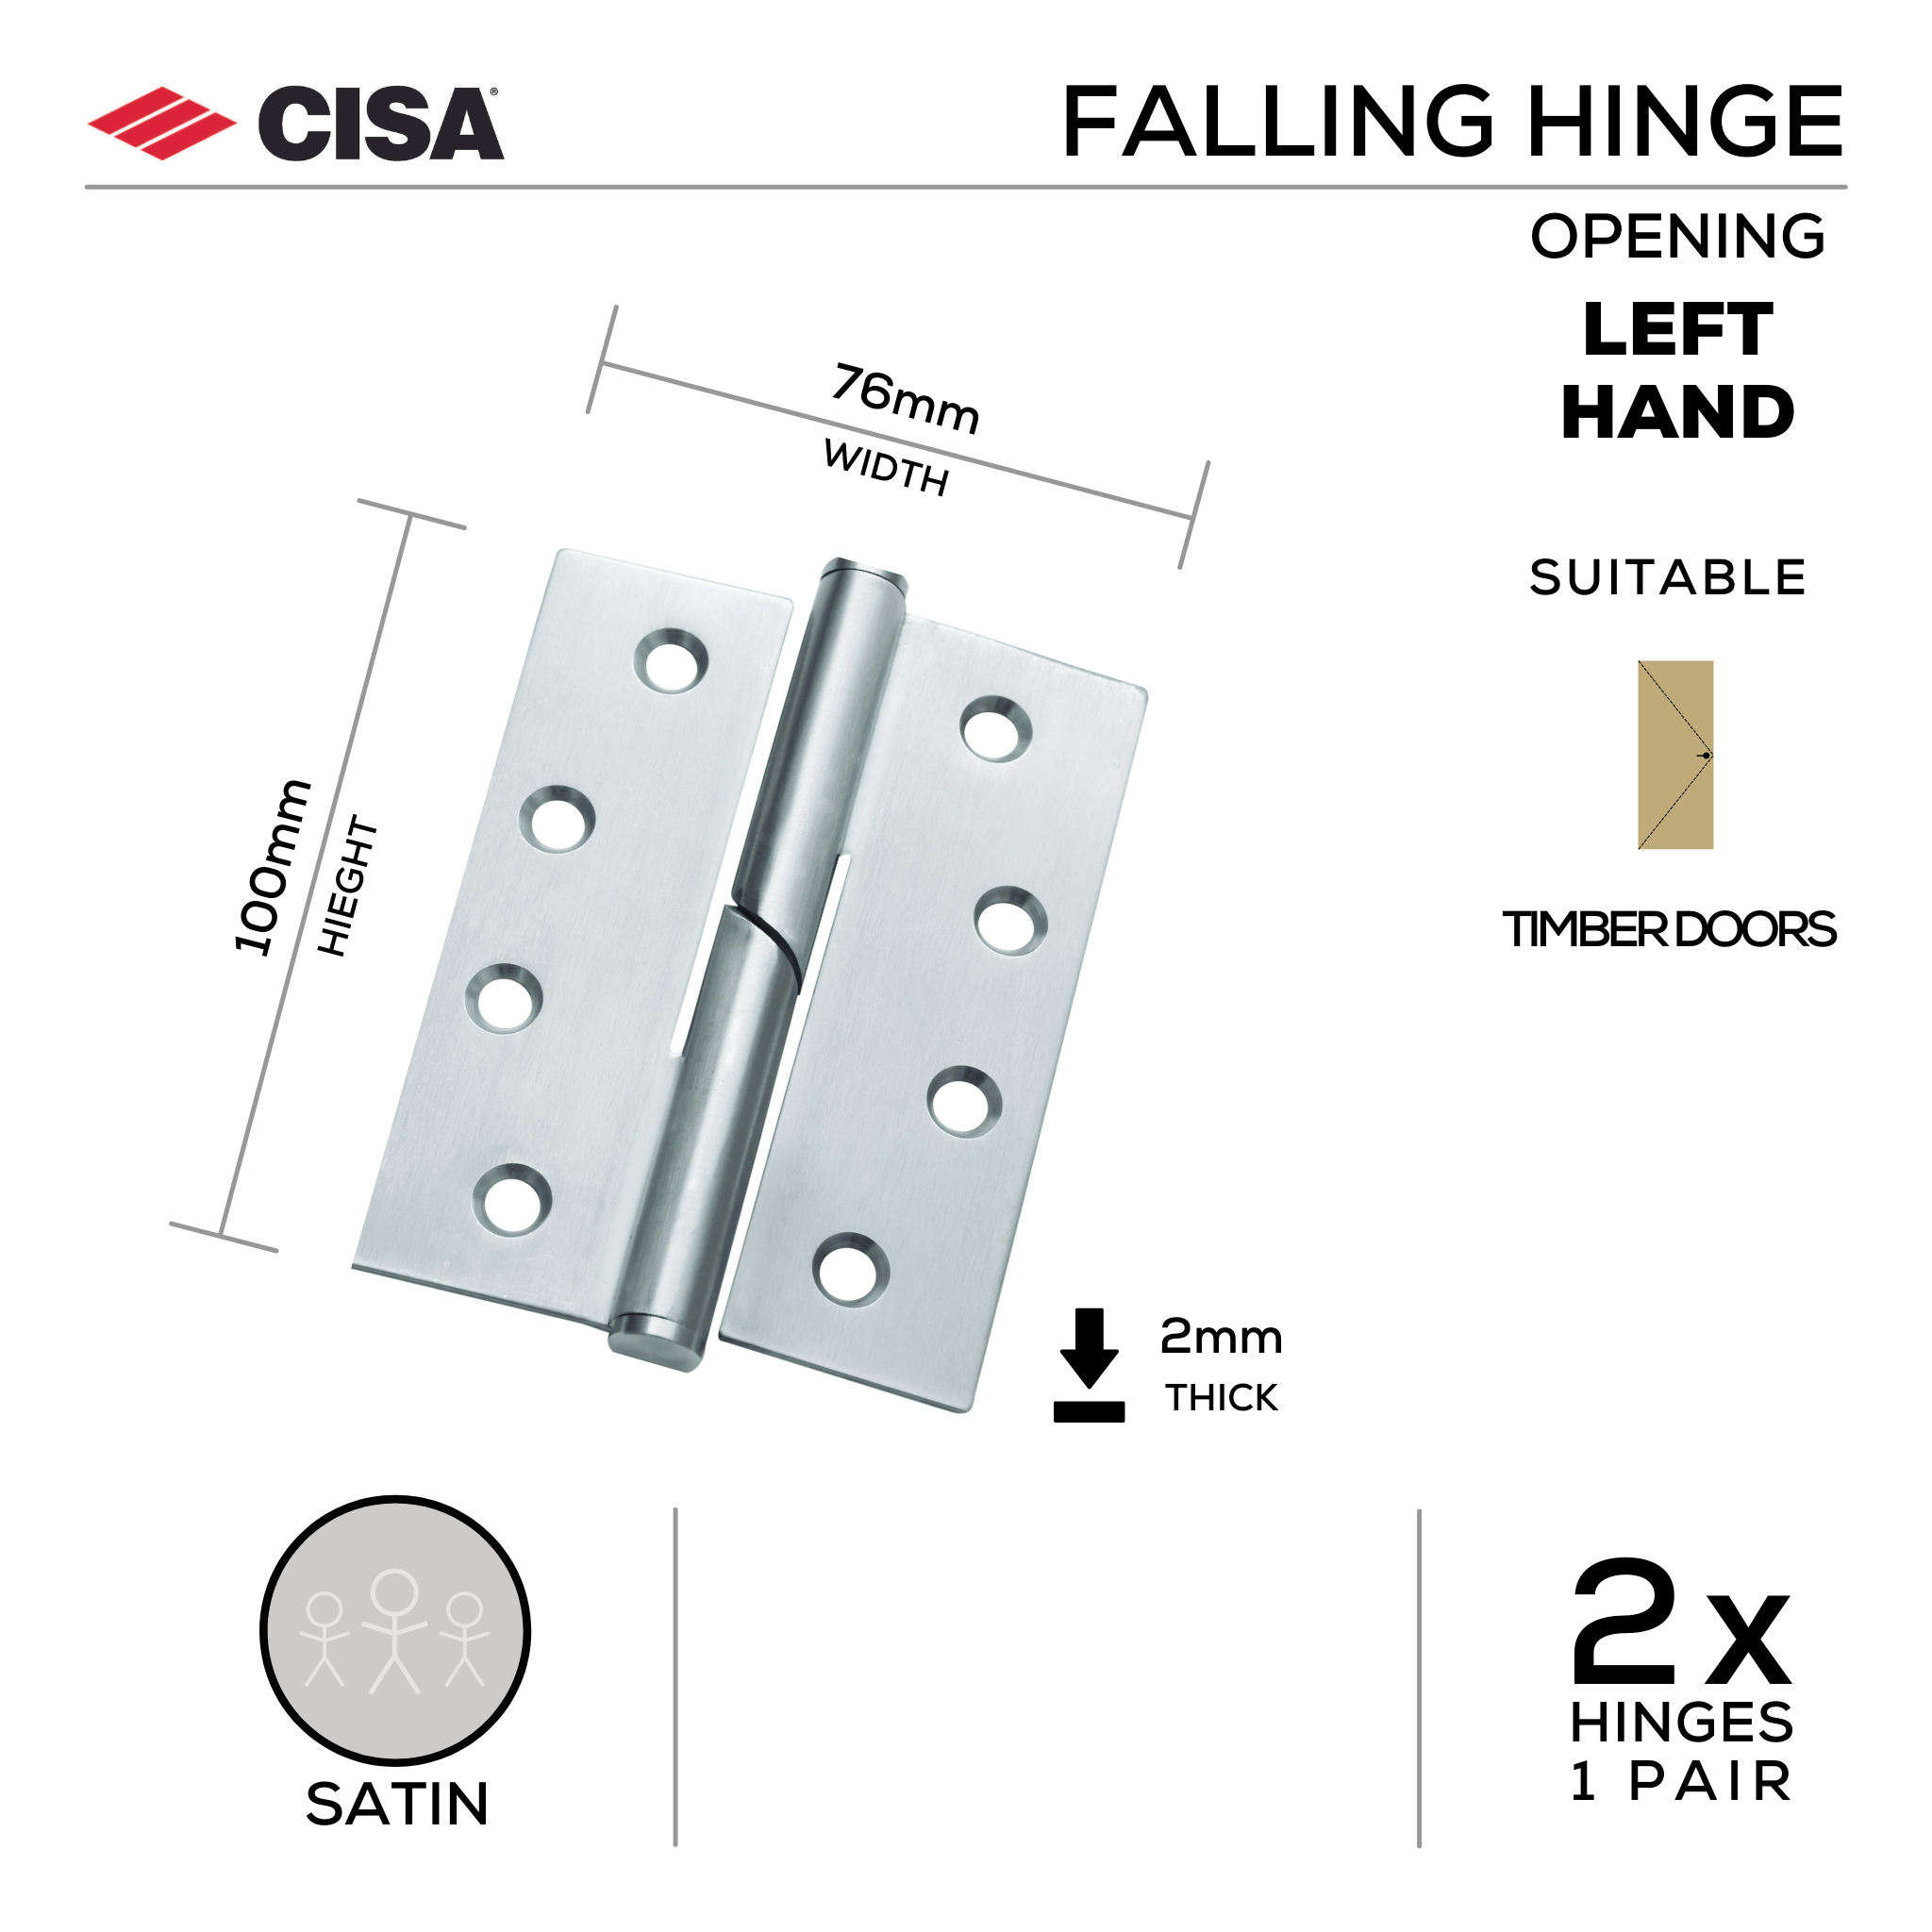 FH76X2FL, Falling Hinge, Lift Off, Left Hand, 2 x Hinges (1 Pair), 100mm (h) x 76mm (w) x 2mm (t), Satin, CISA